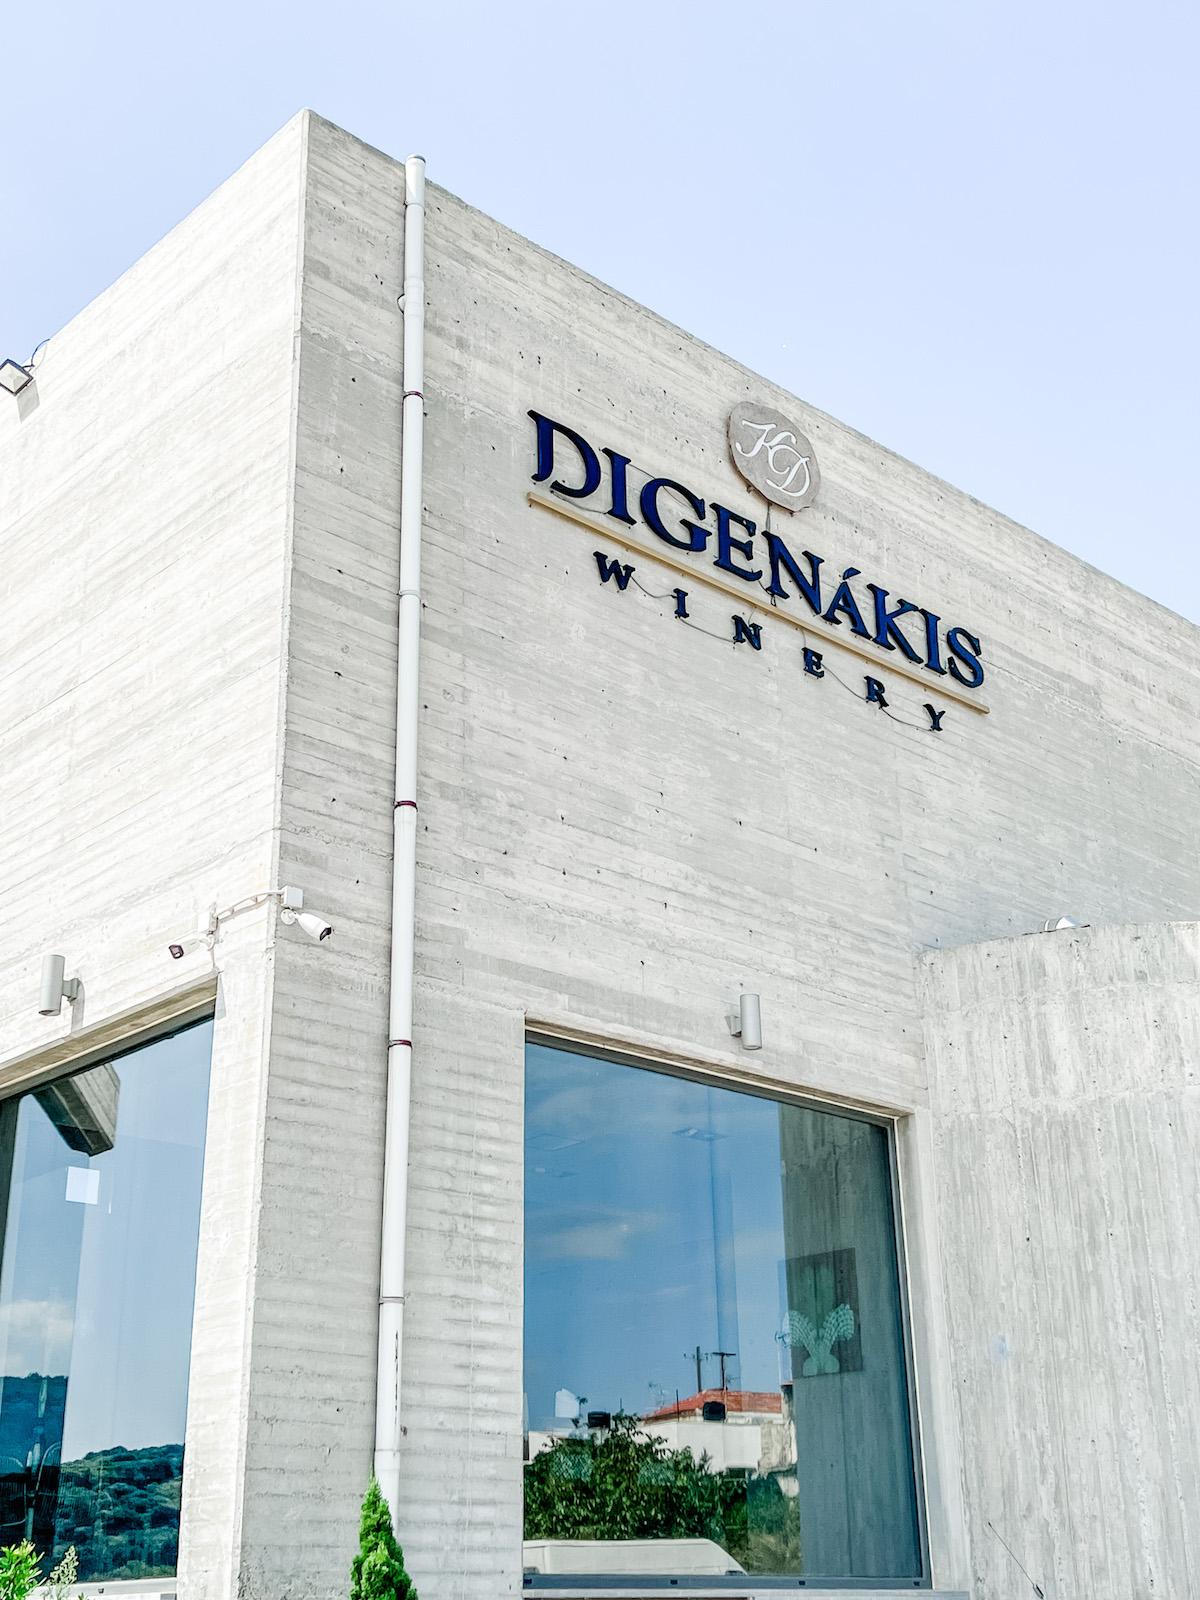 Digenakis Winery building